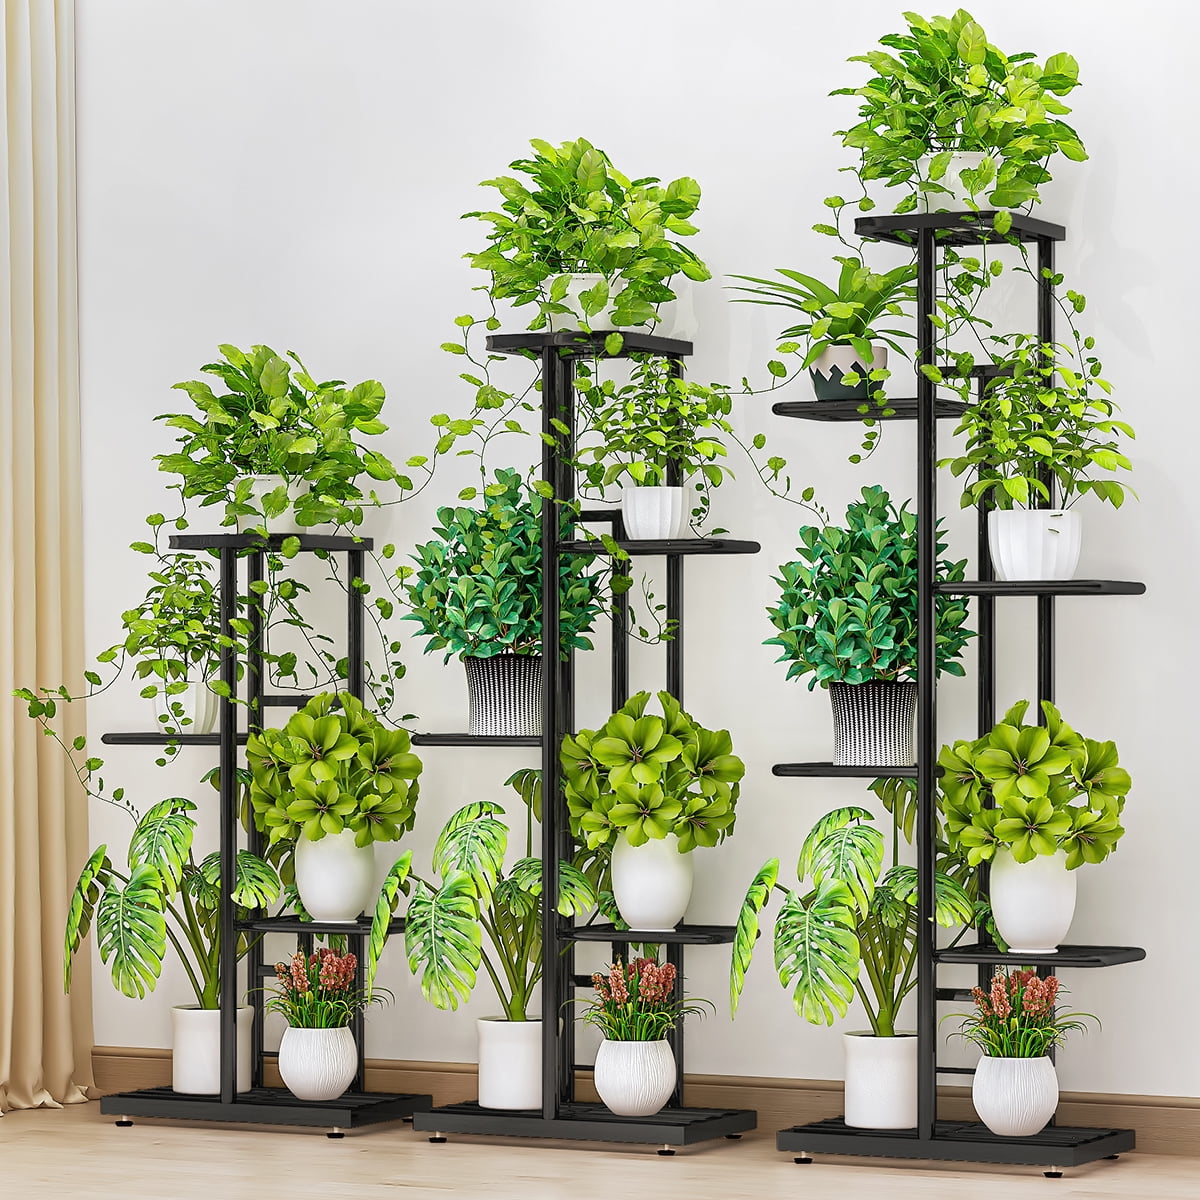 15" 2 PCS Iron Plant Stand Planter Holder Flower Shelf Rack Garden Decoration